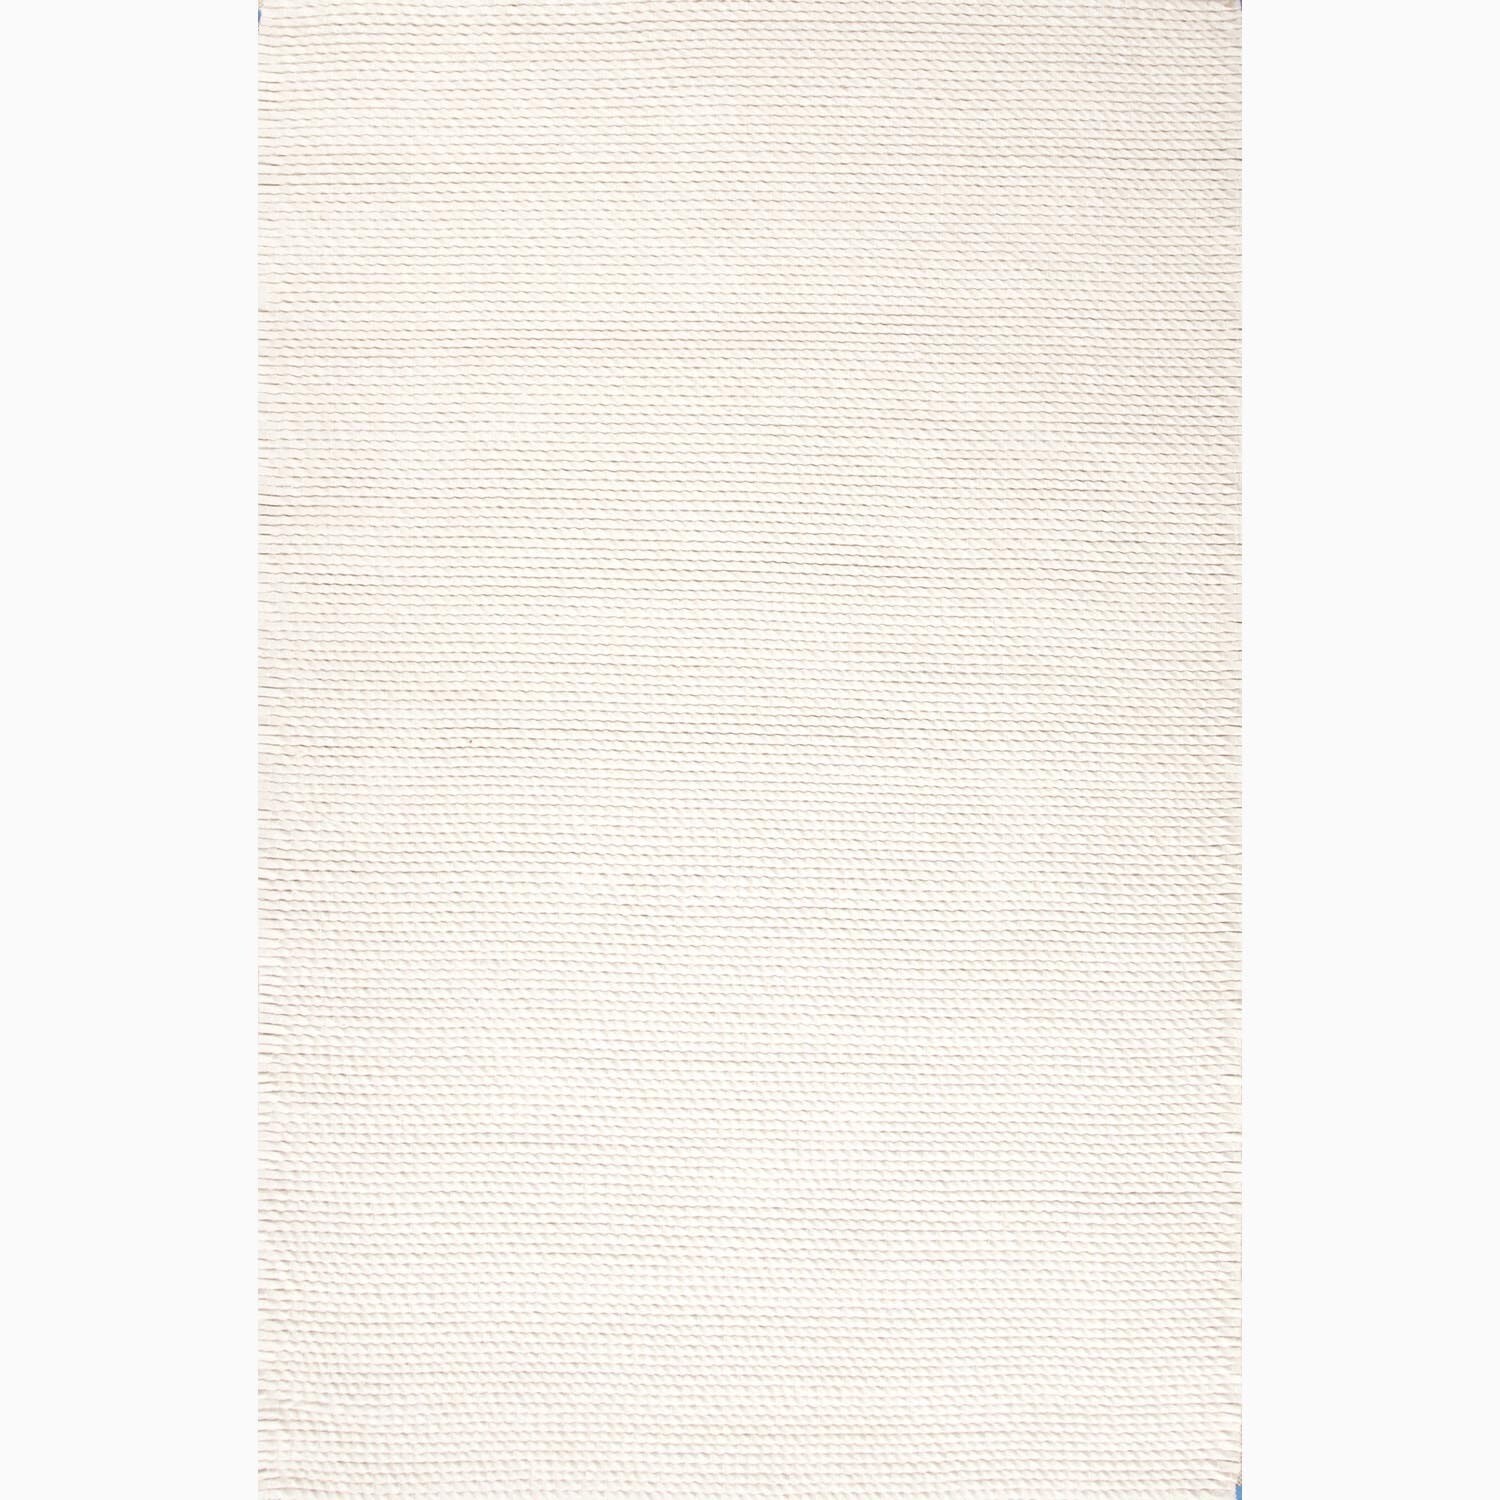 Hand made Ivory/ White Wool Textured Rug (8x10)